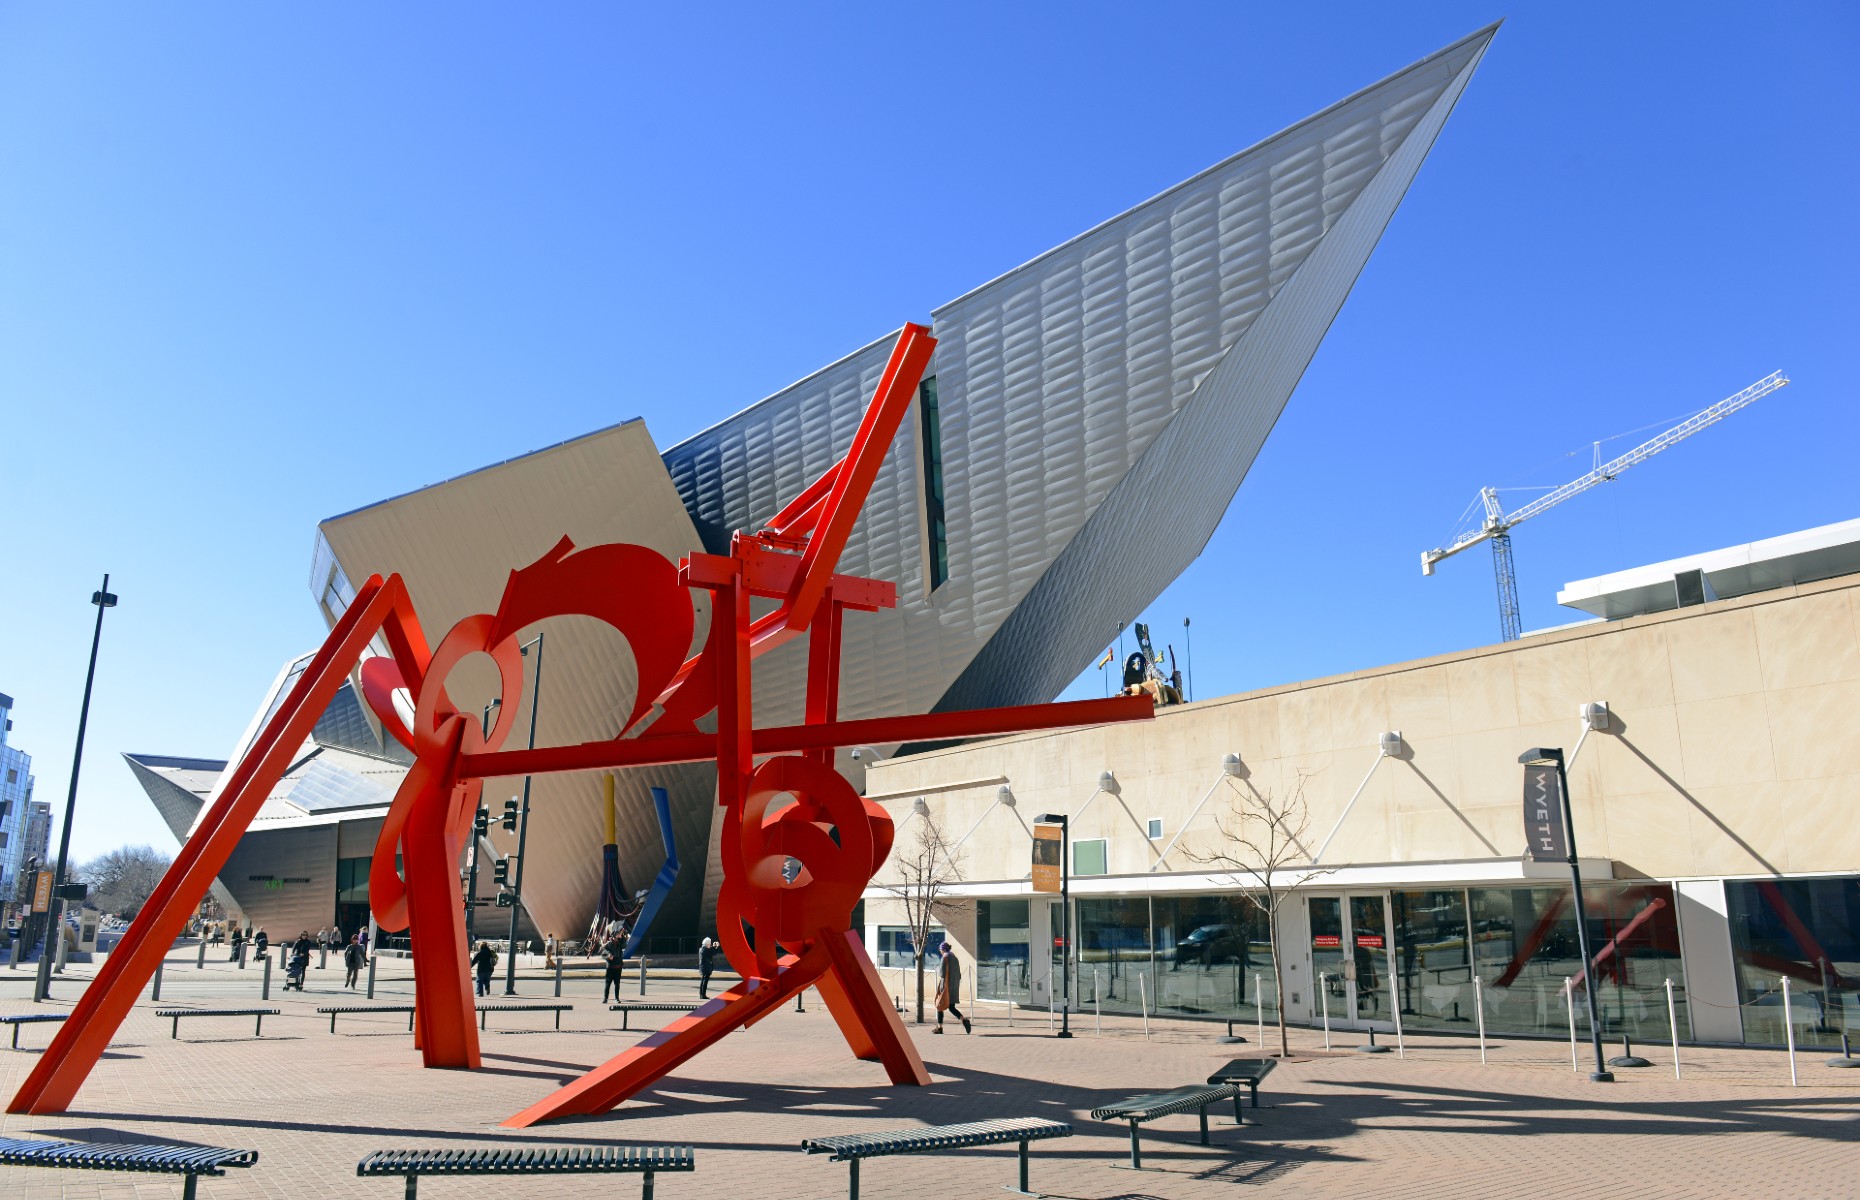 Denver Art Museum (Image: nyker/Shutterstock)